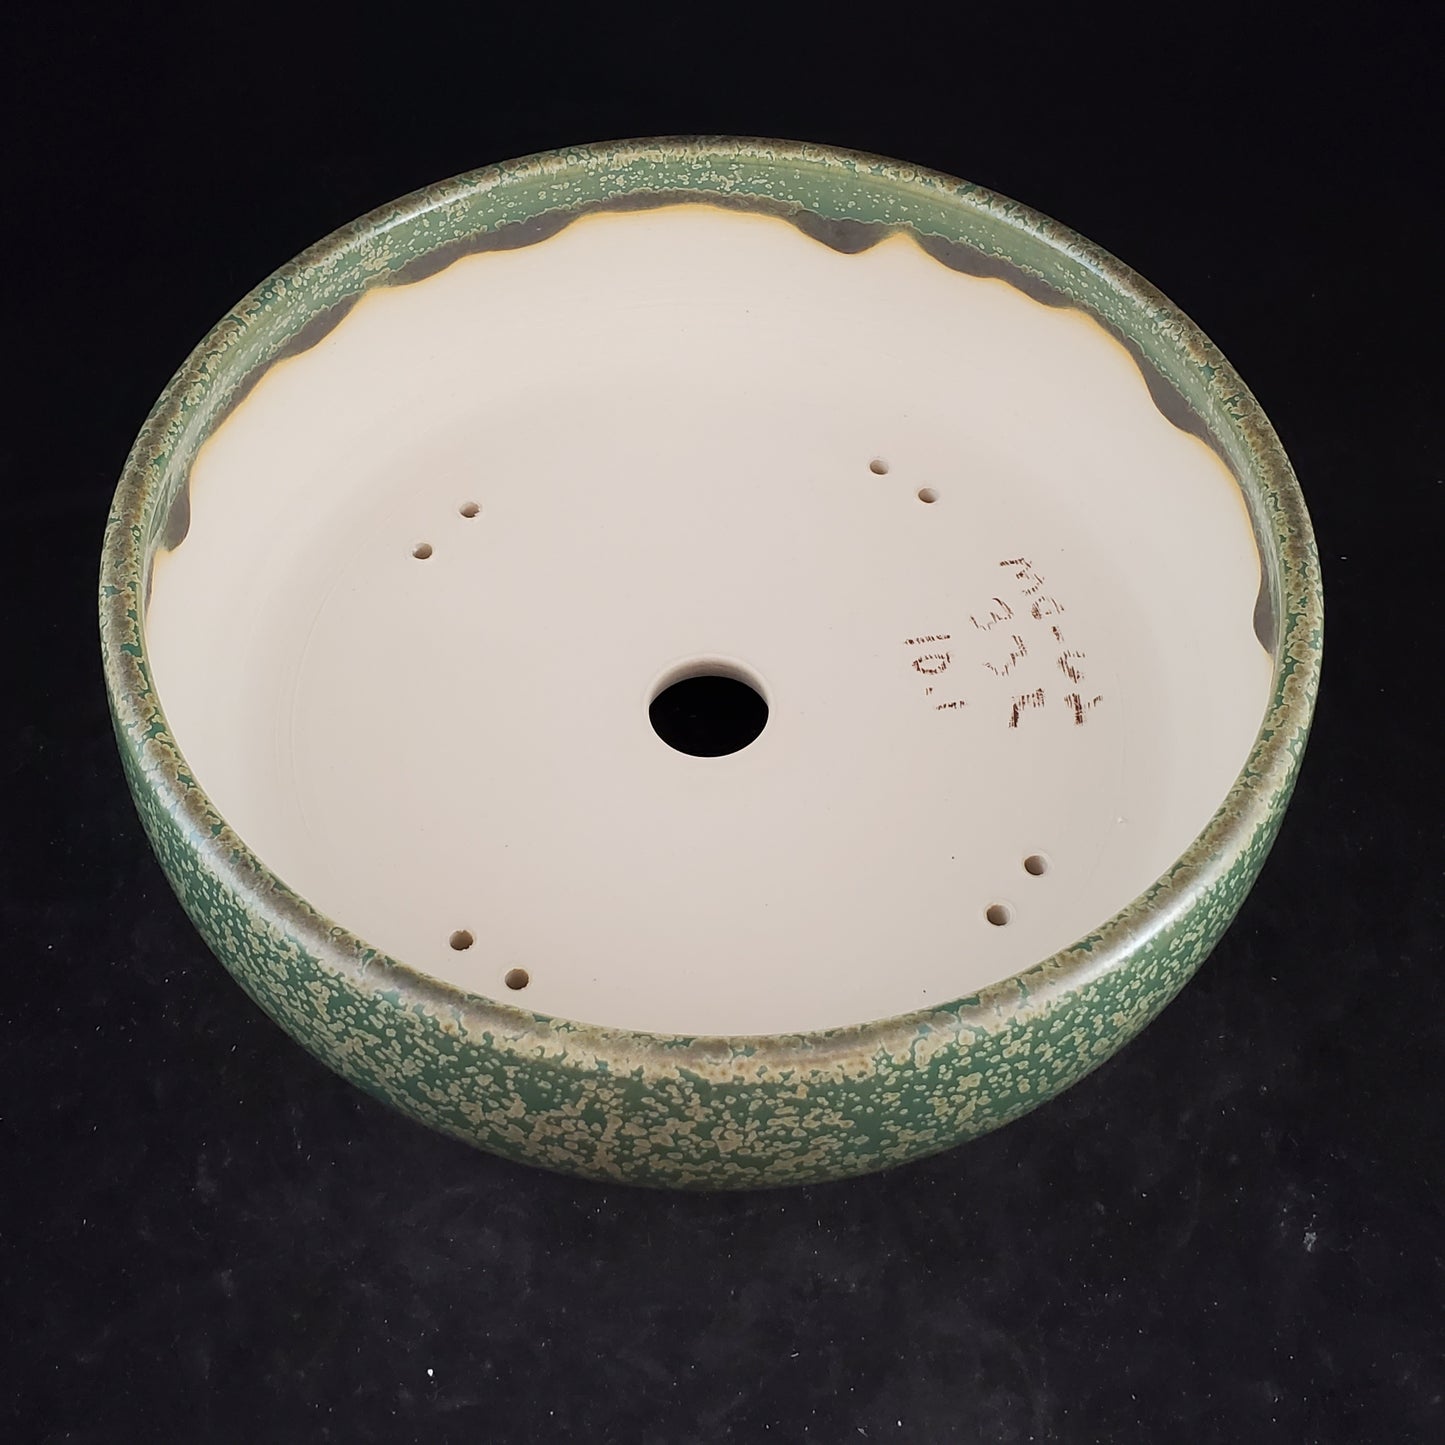 Bonsai Pot Round 4-23-1127 [8x3]